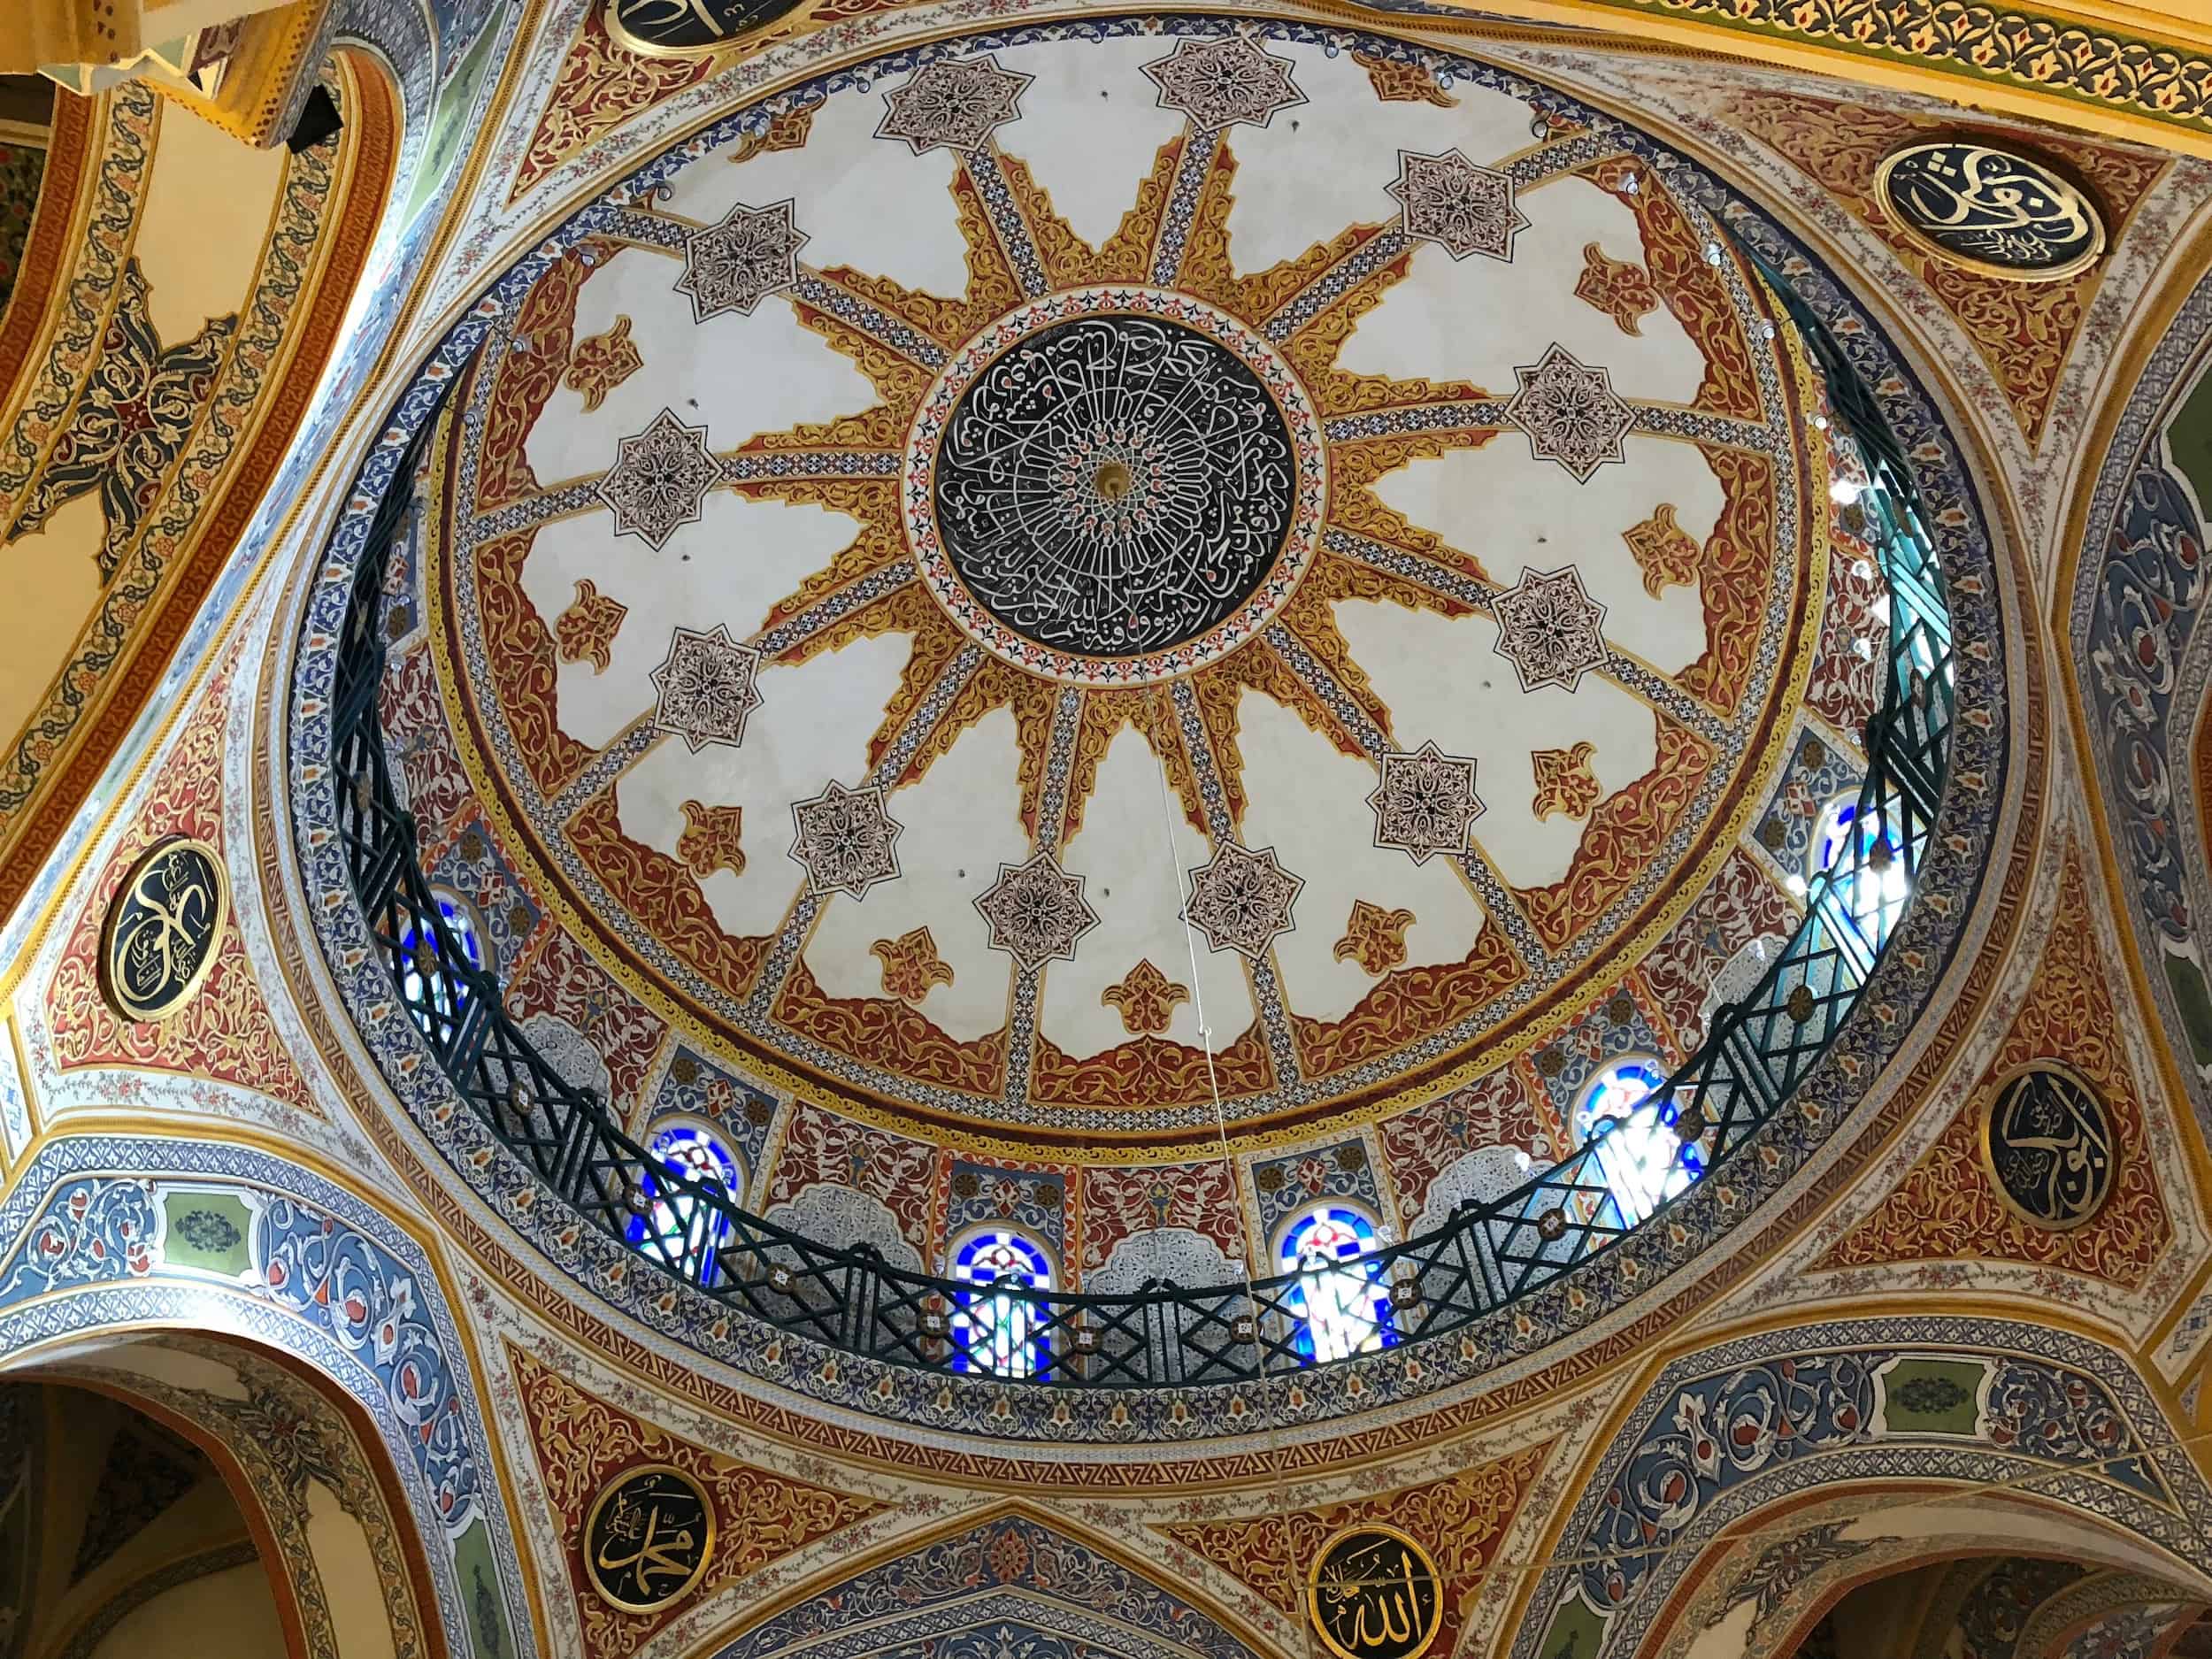 Dome of the Sinan Pasha Mosque in Beşiktaş, Istanbul, Turkey